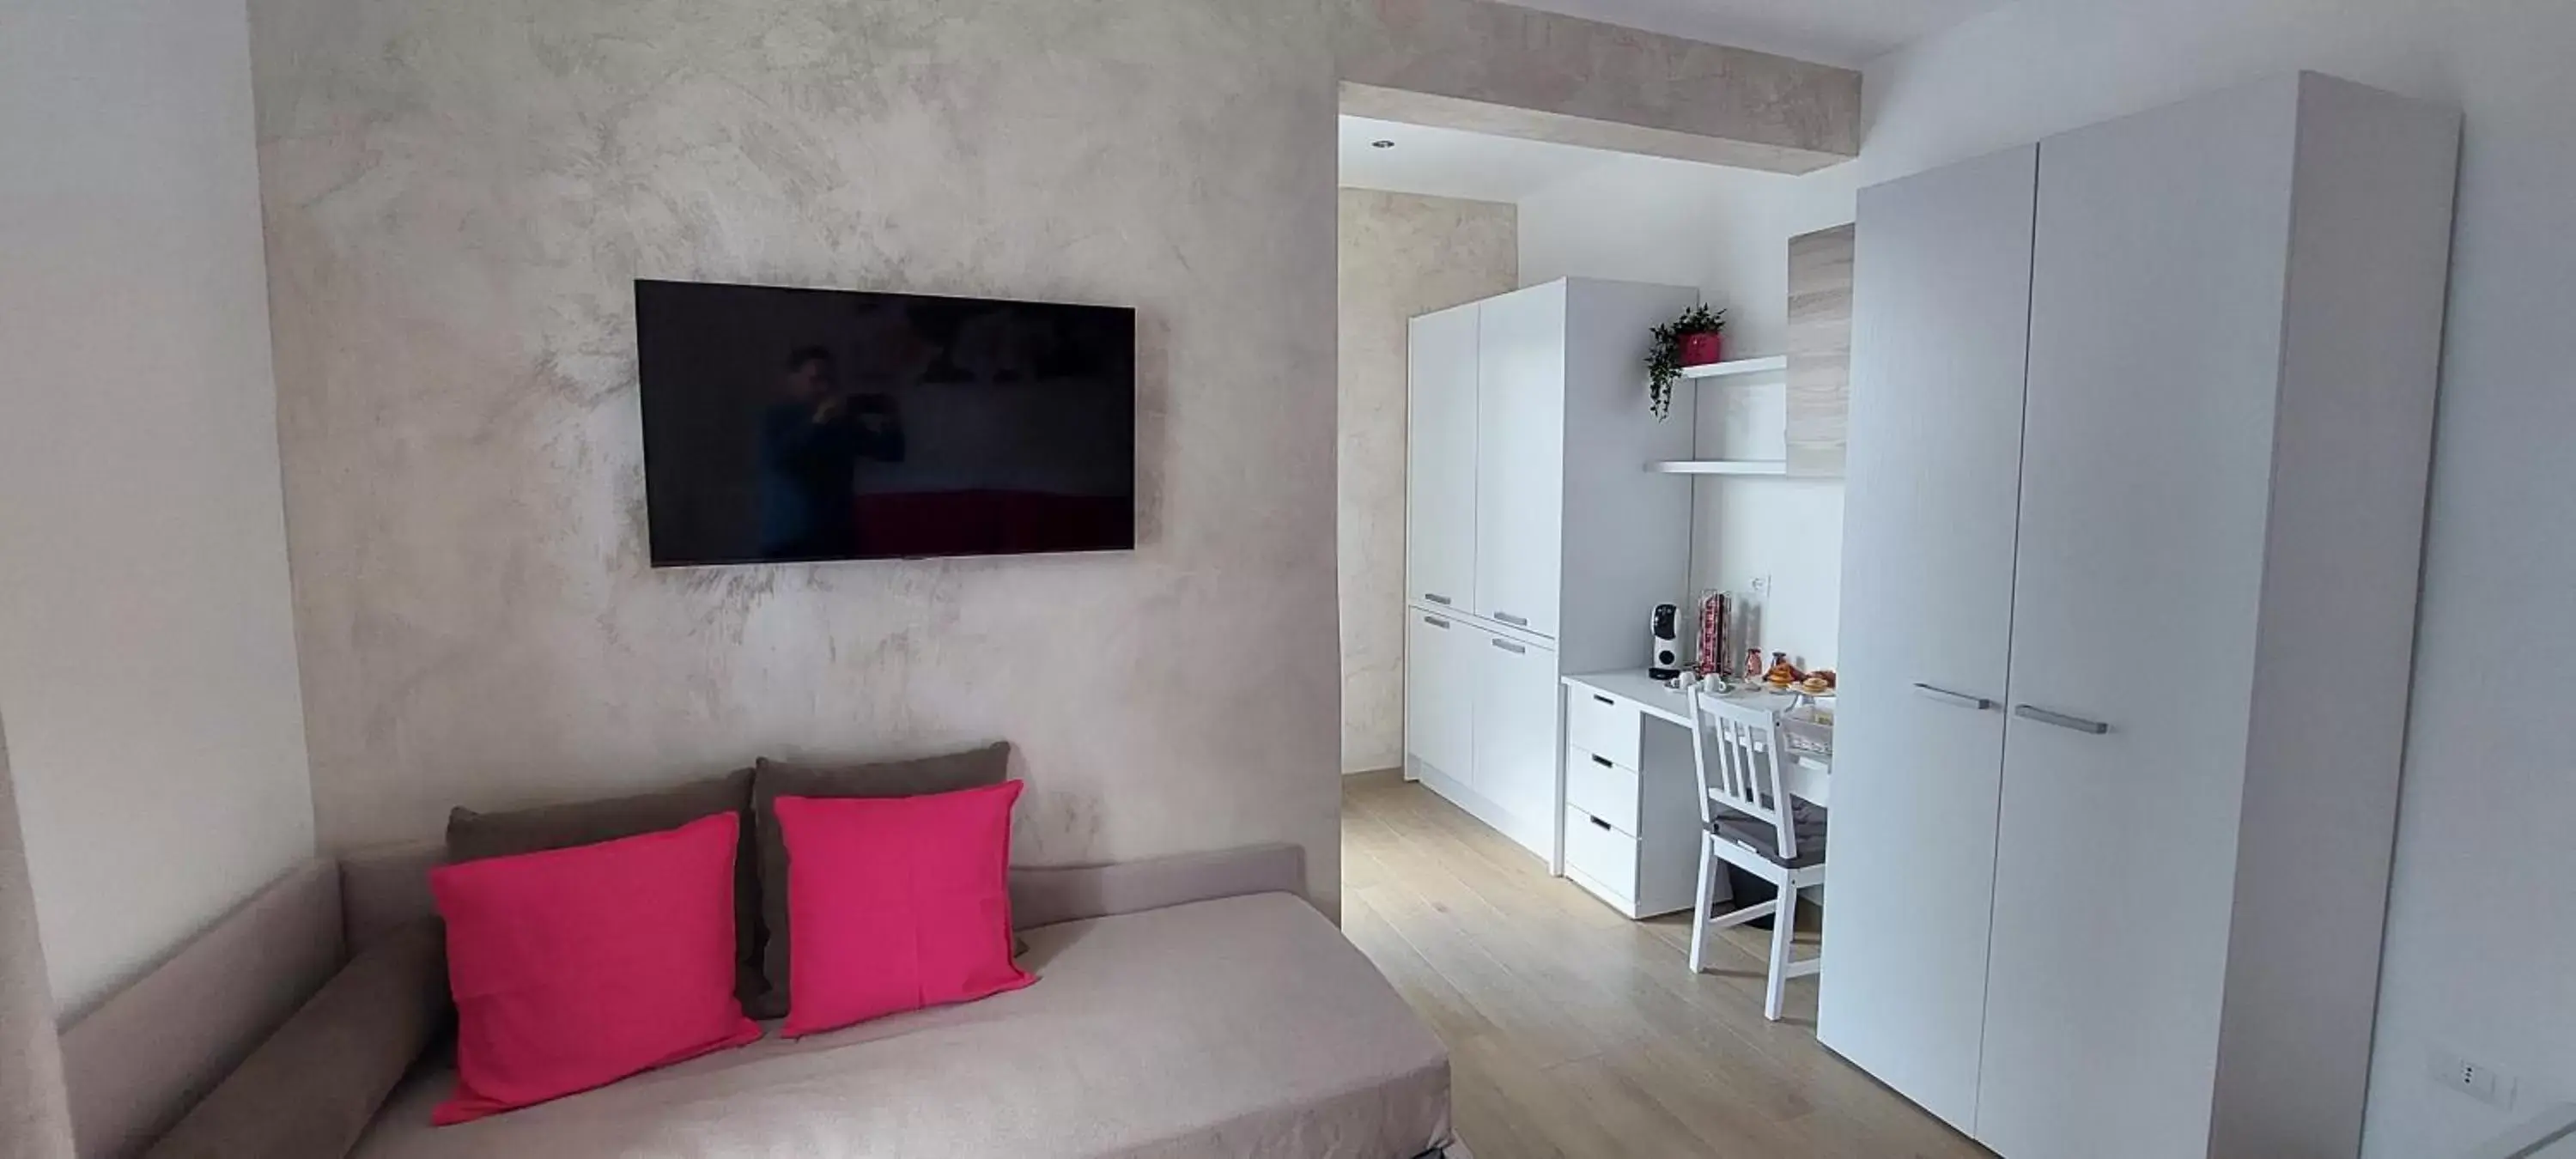 TV and multimedia, Seating Area in B&B Villa Noemi